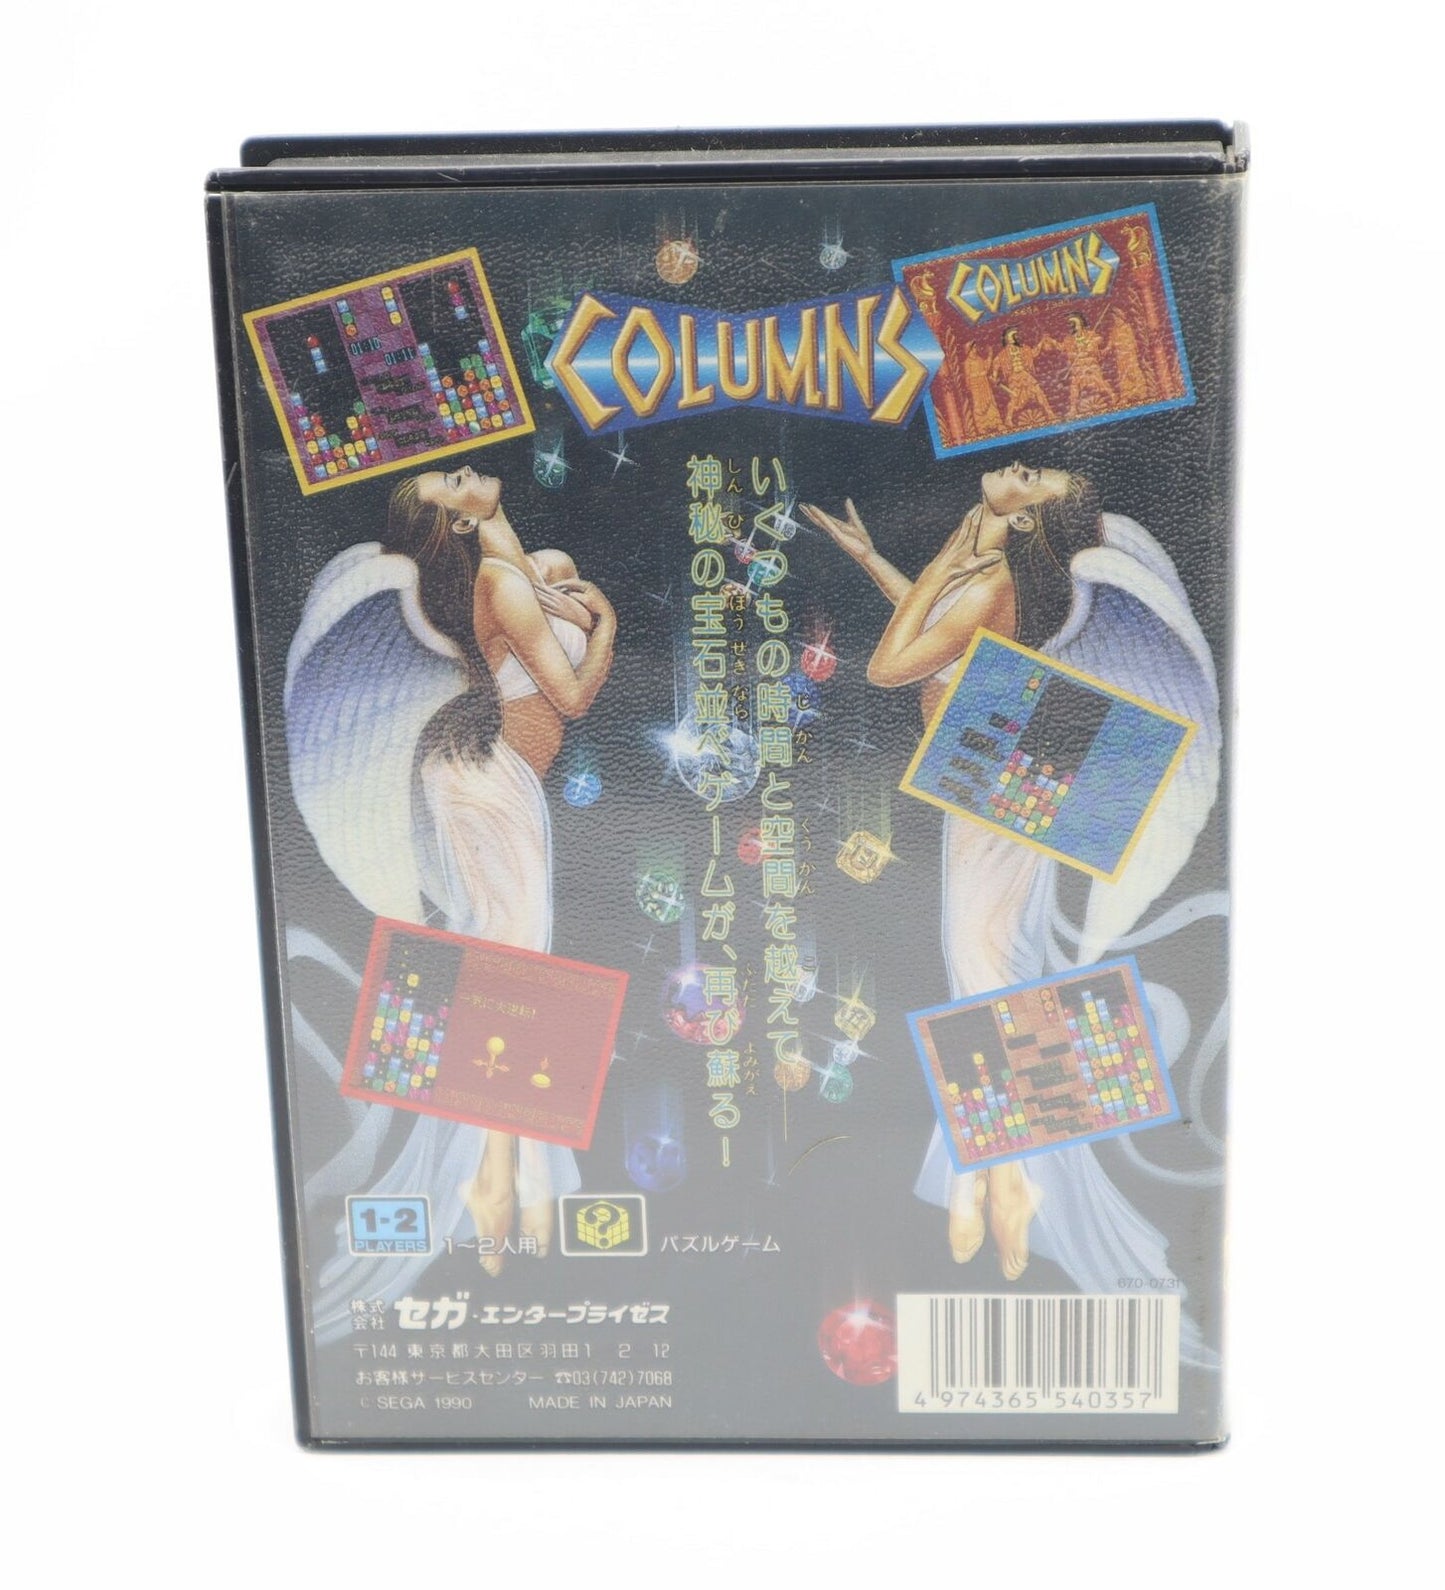 COLUMNS RARE & COMPLETE SEGA MD  Sega Mega Drive game CIB - PAL